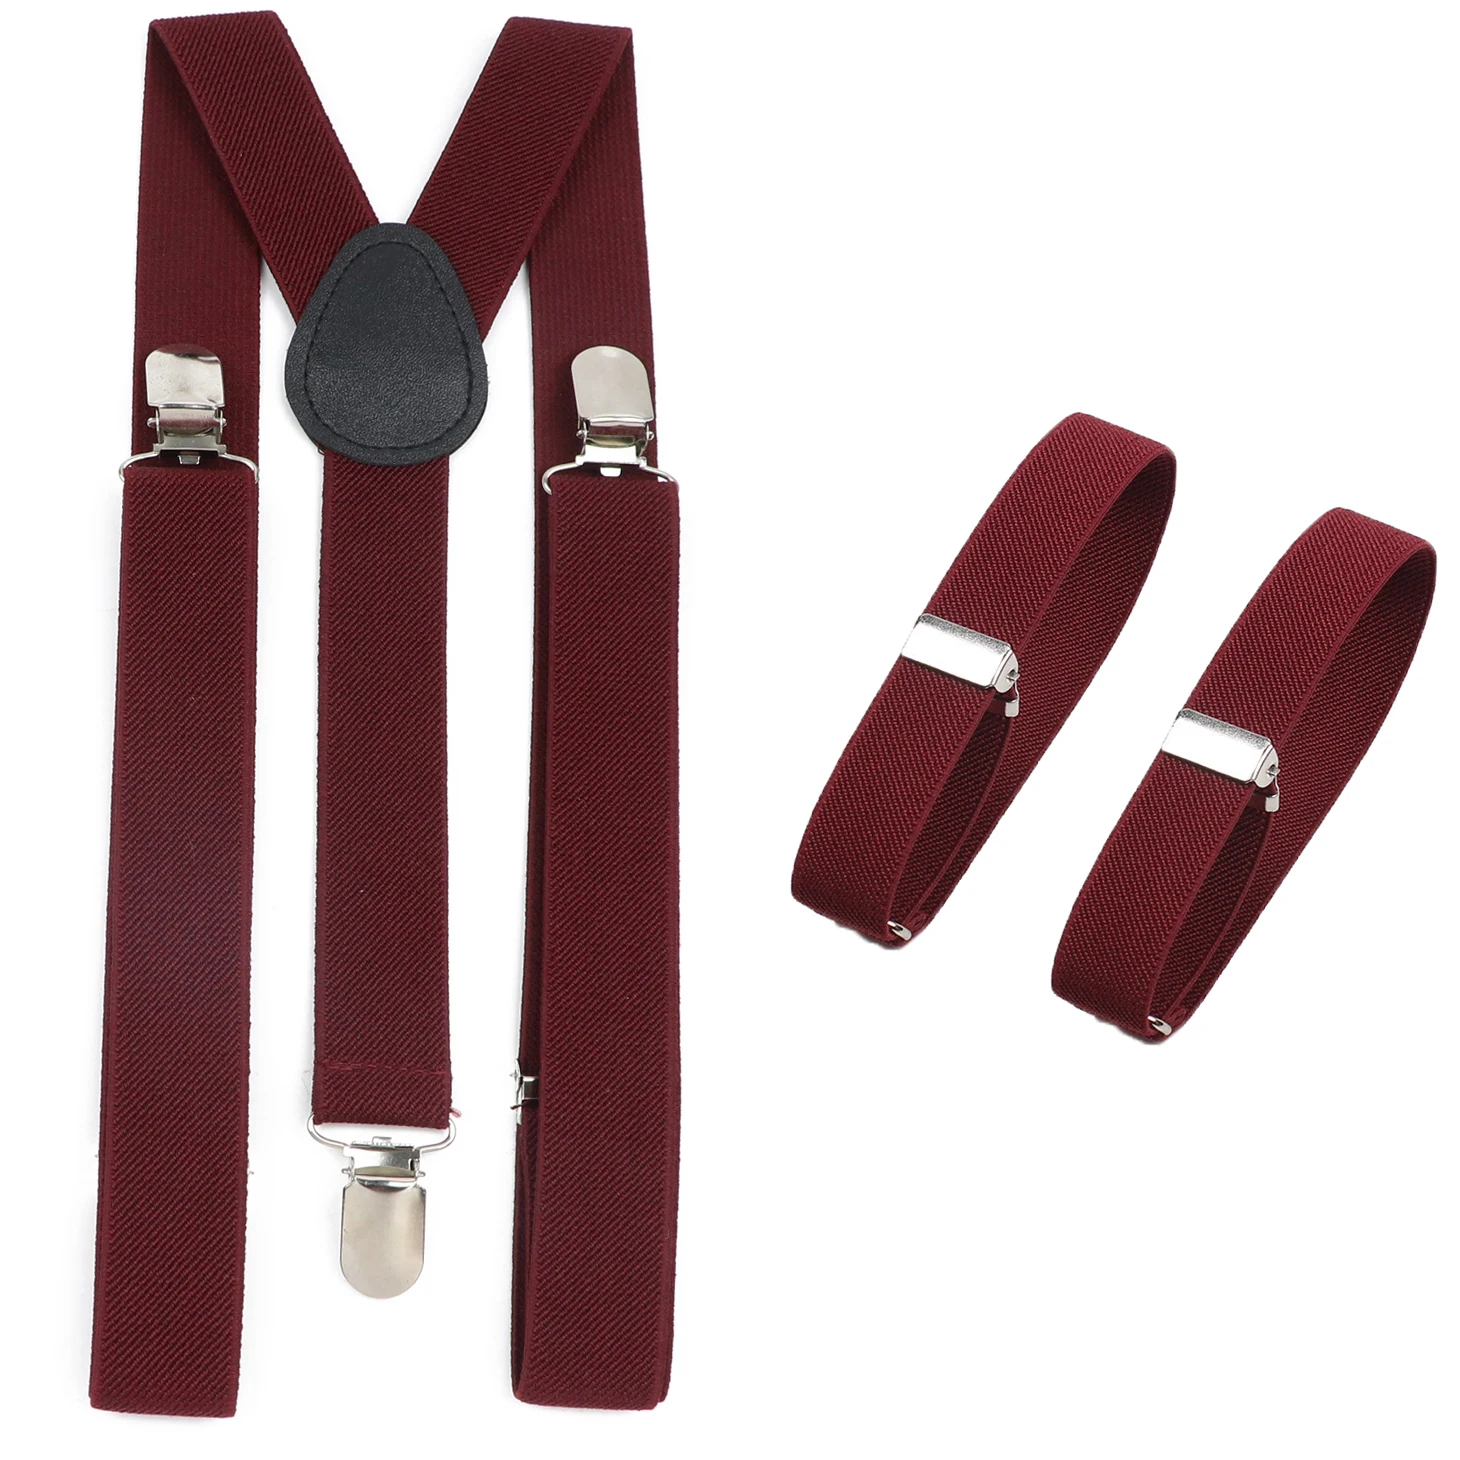 Solid Color Elastic Leather Suspenders Braces Armband Shirt Sleeve Holder Set Men Women Adjustable Straps Suit Accessories Gift